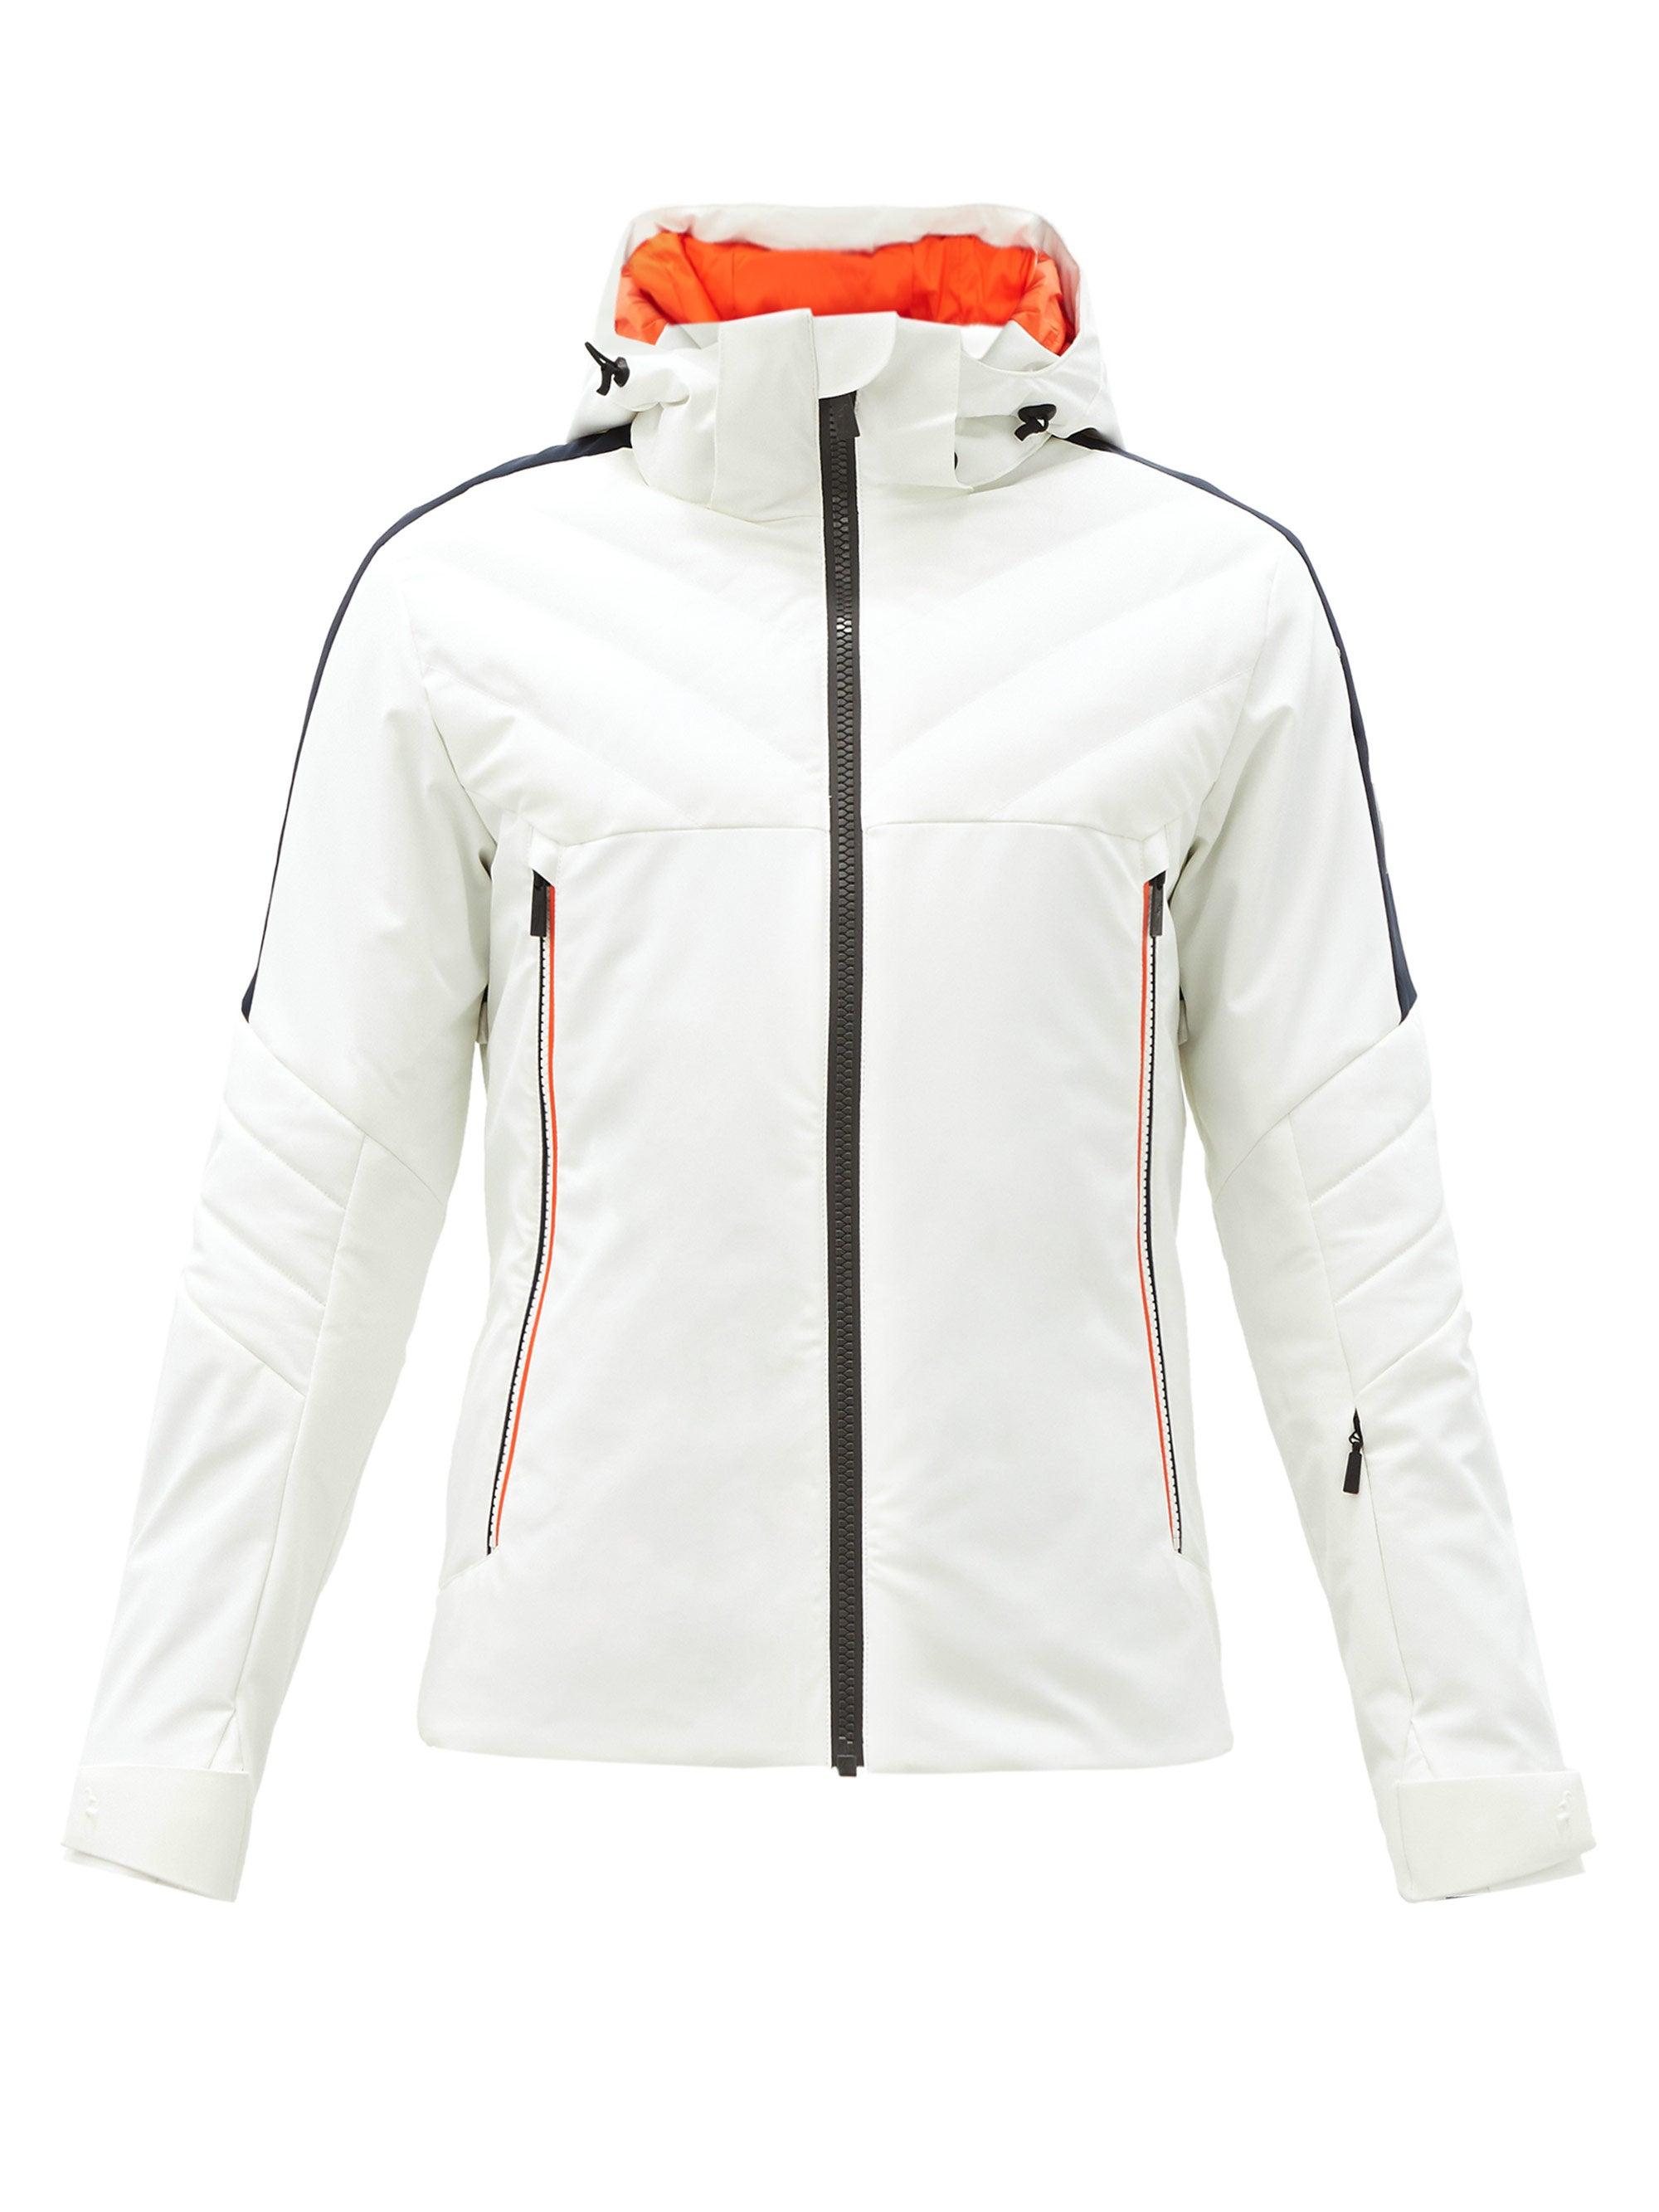 Toni Sailer Finlay Hooded Soft-shell Ski Jacket in White for Men - Lyst